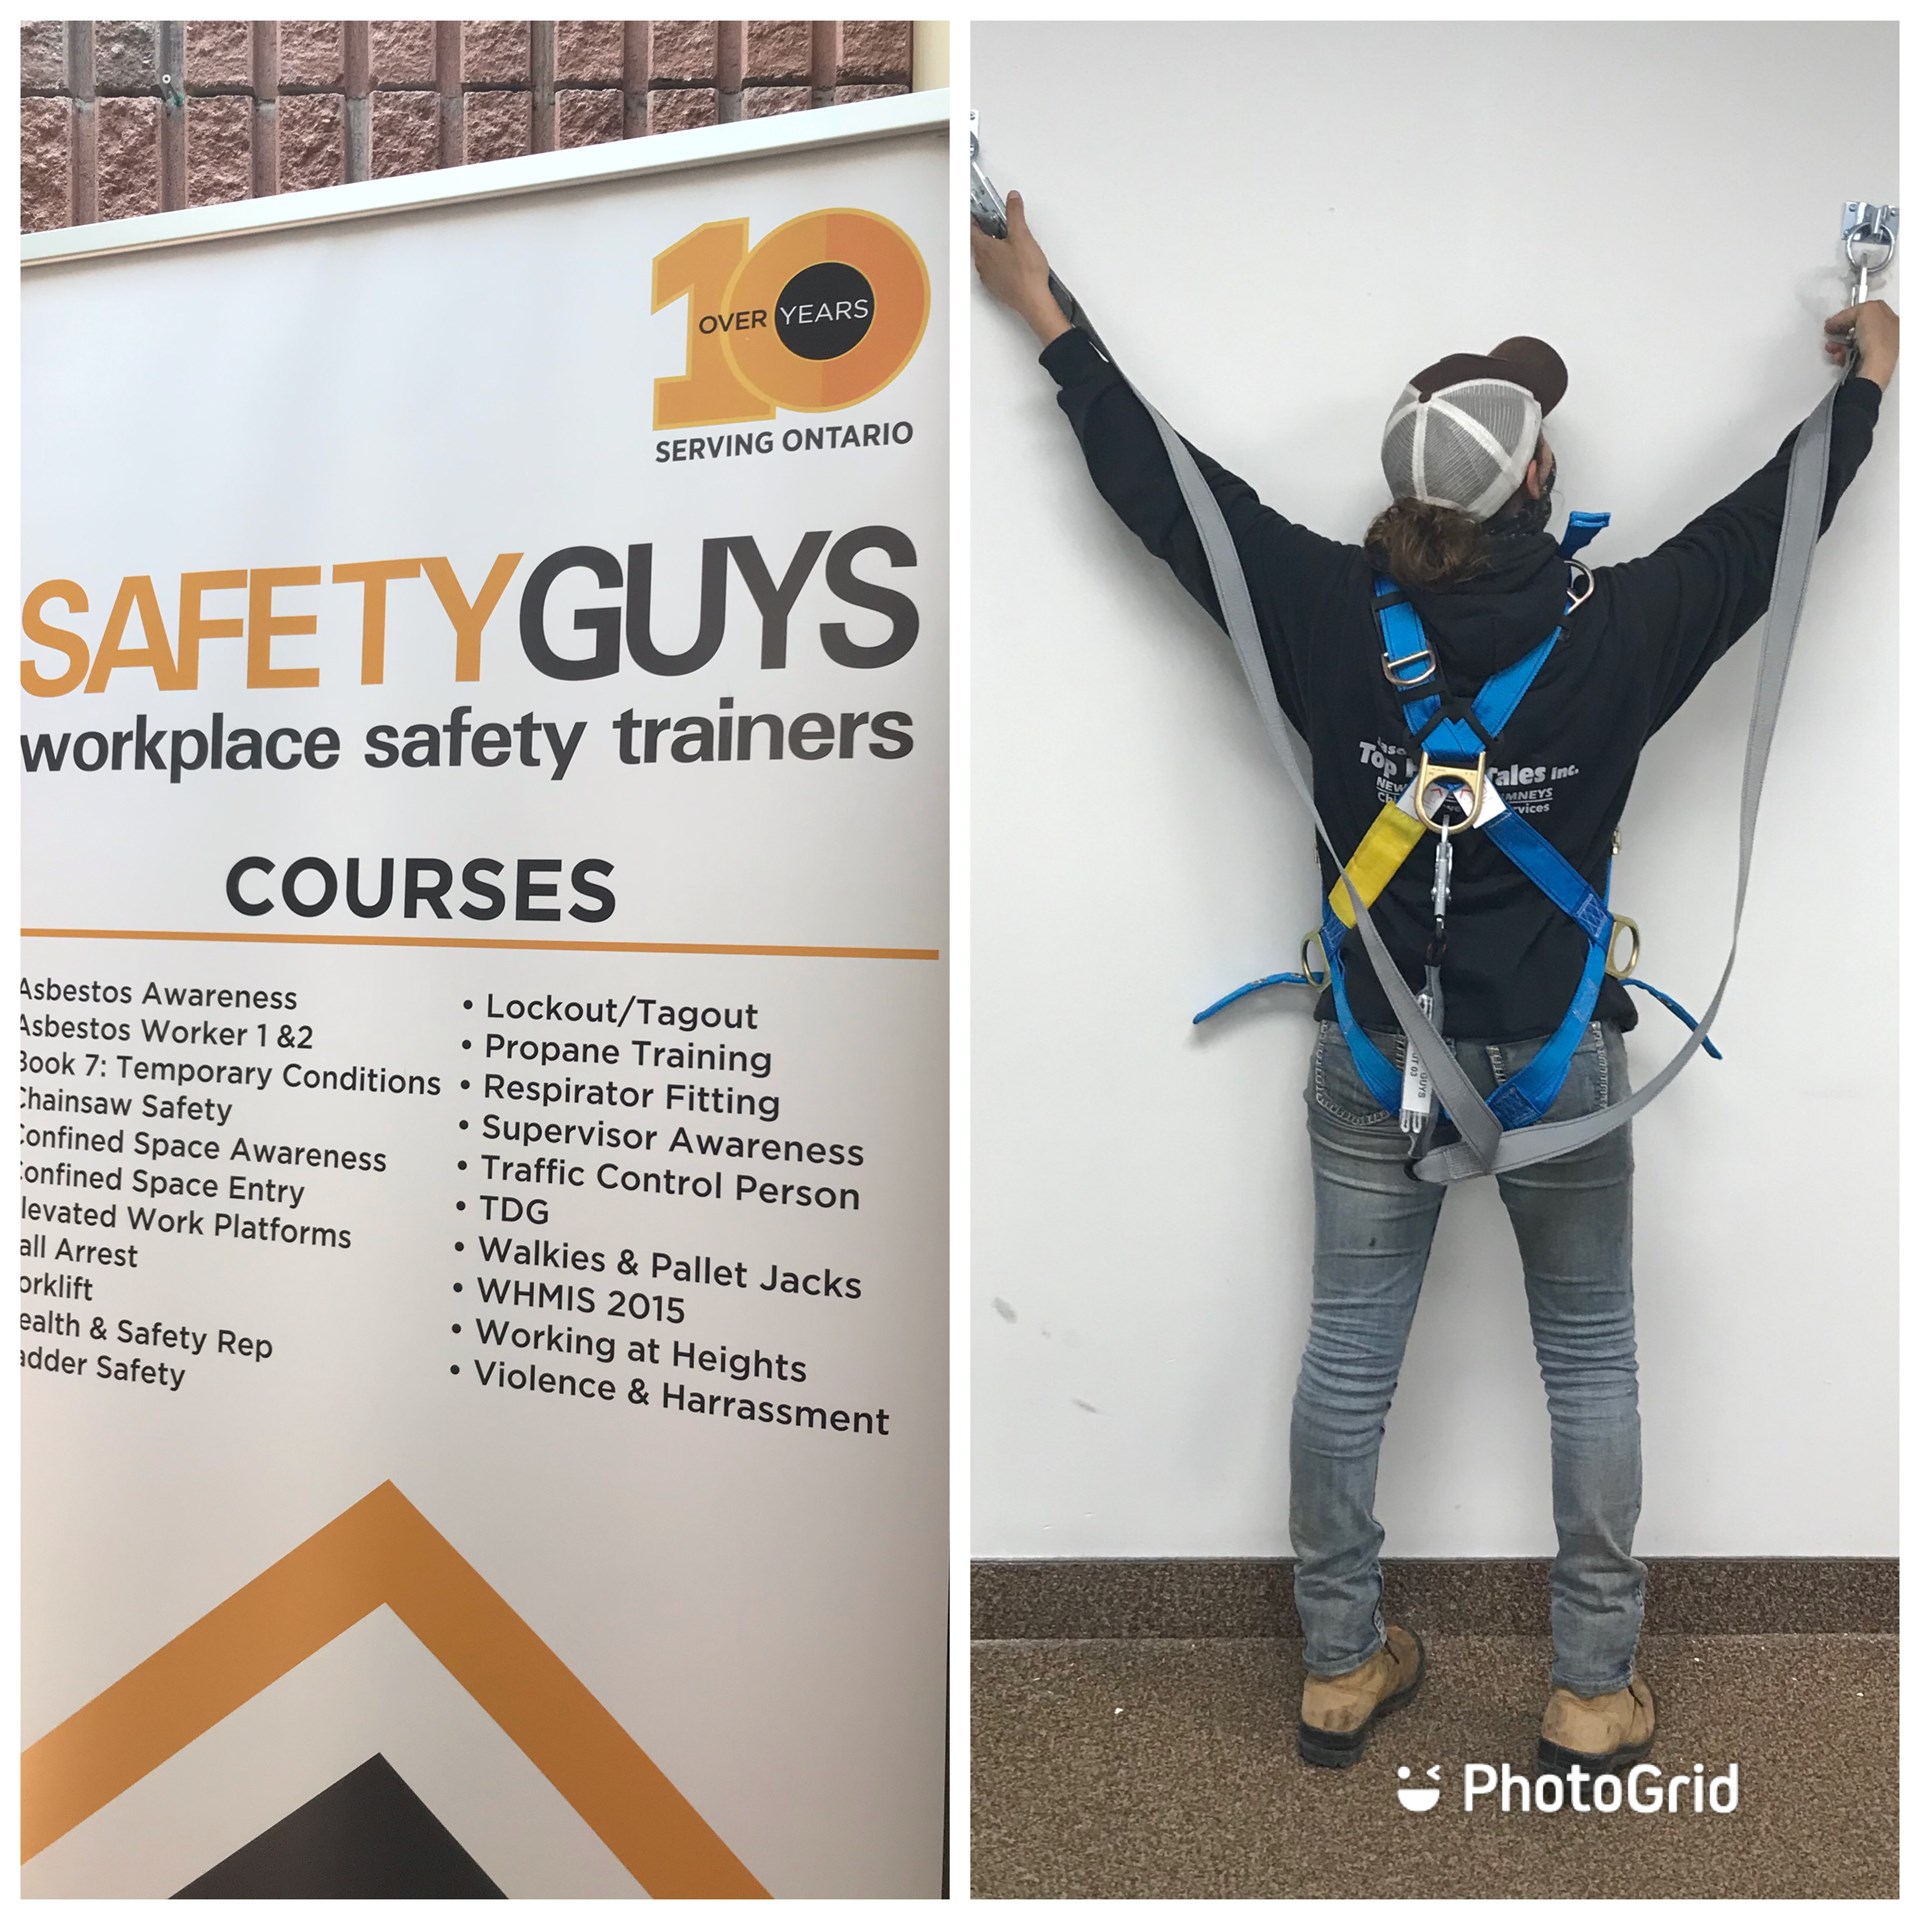 Safety Guys training